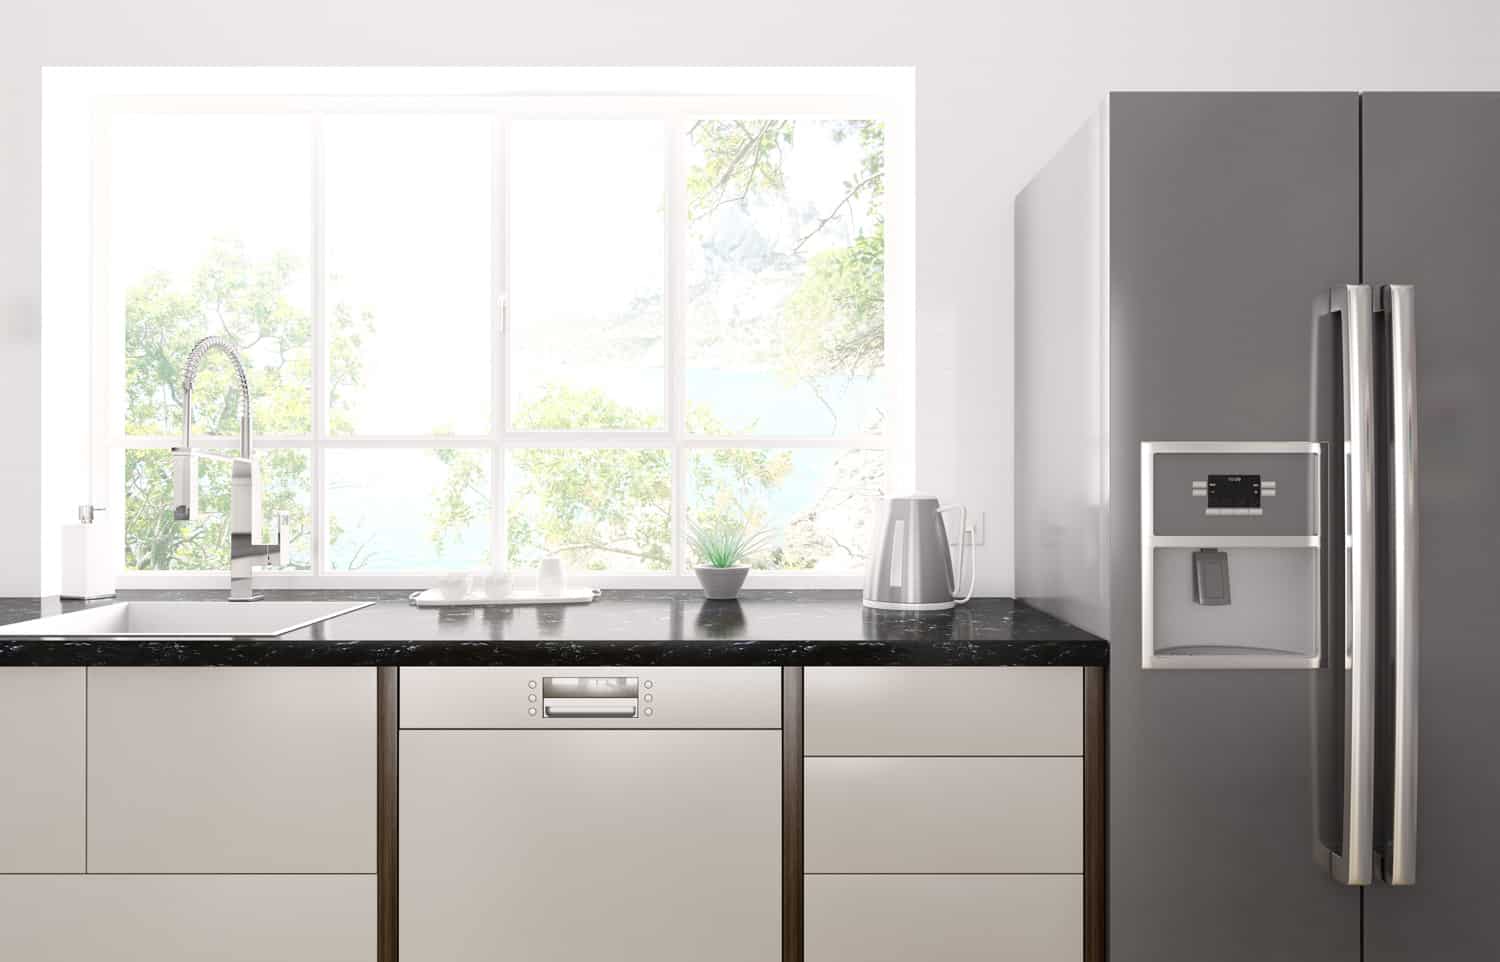 Interior of modern kitchen with black granite counter, refrigerator